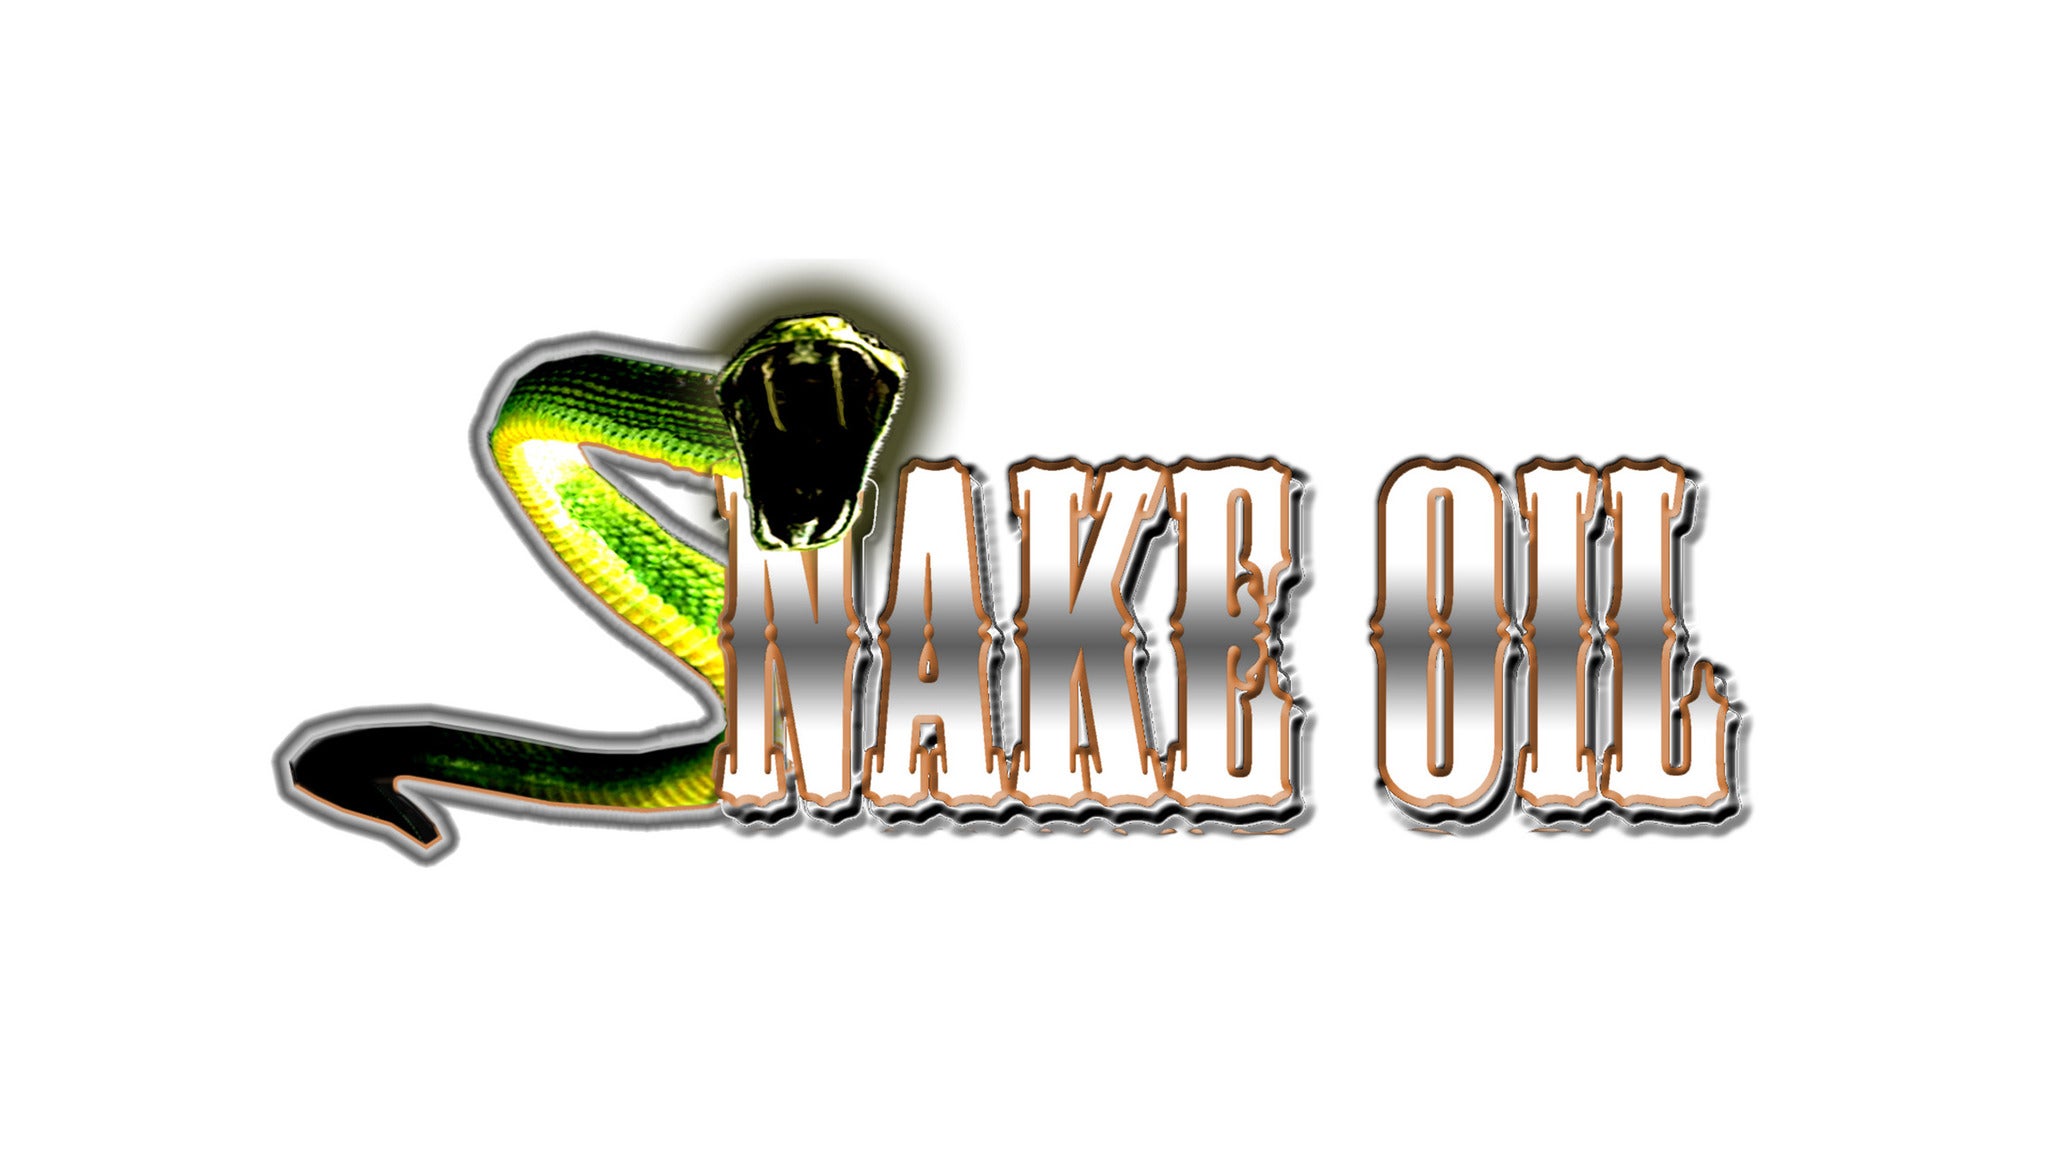 Snake Oil presale information on freepresalepasswords.com